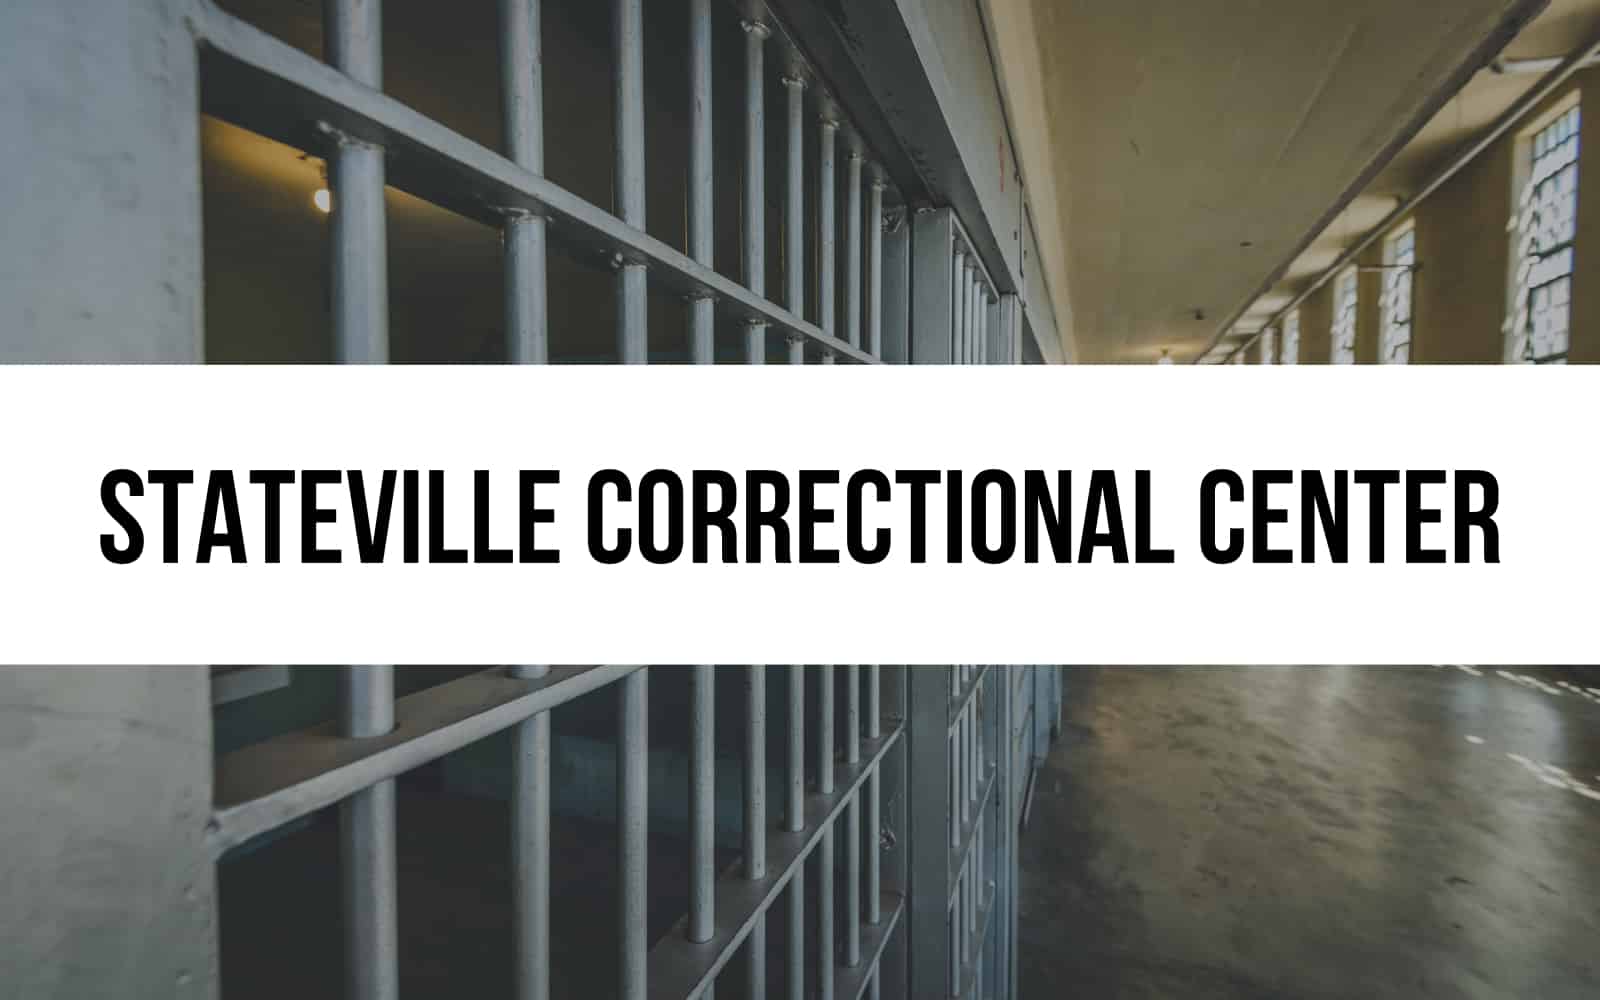 Stateville Correctional Center